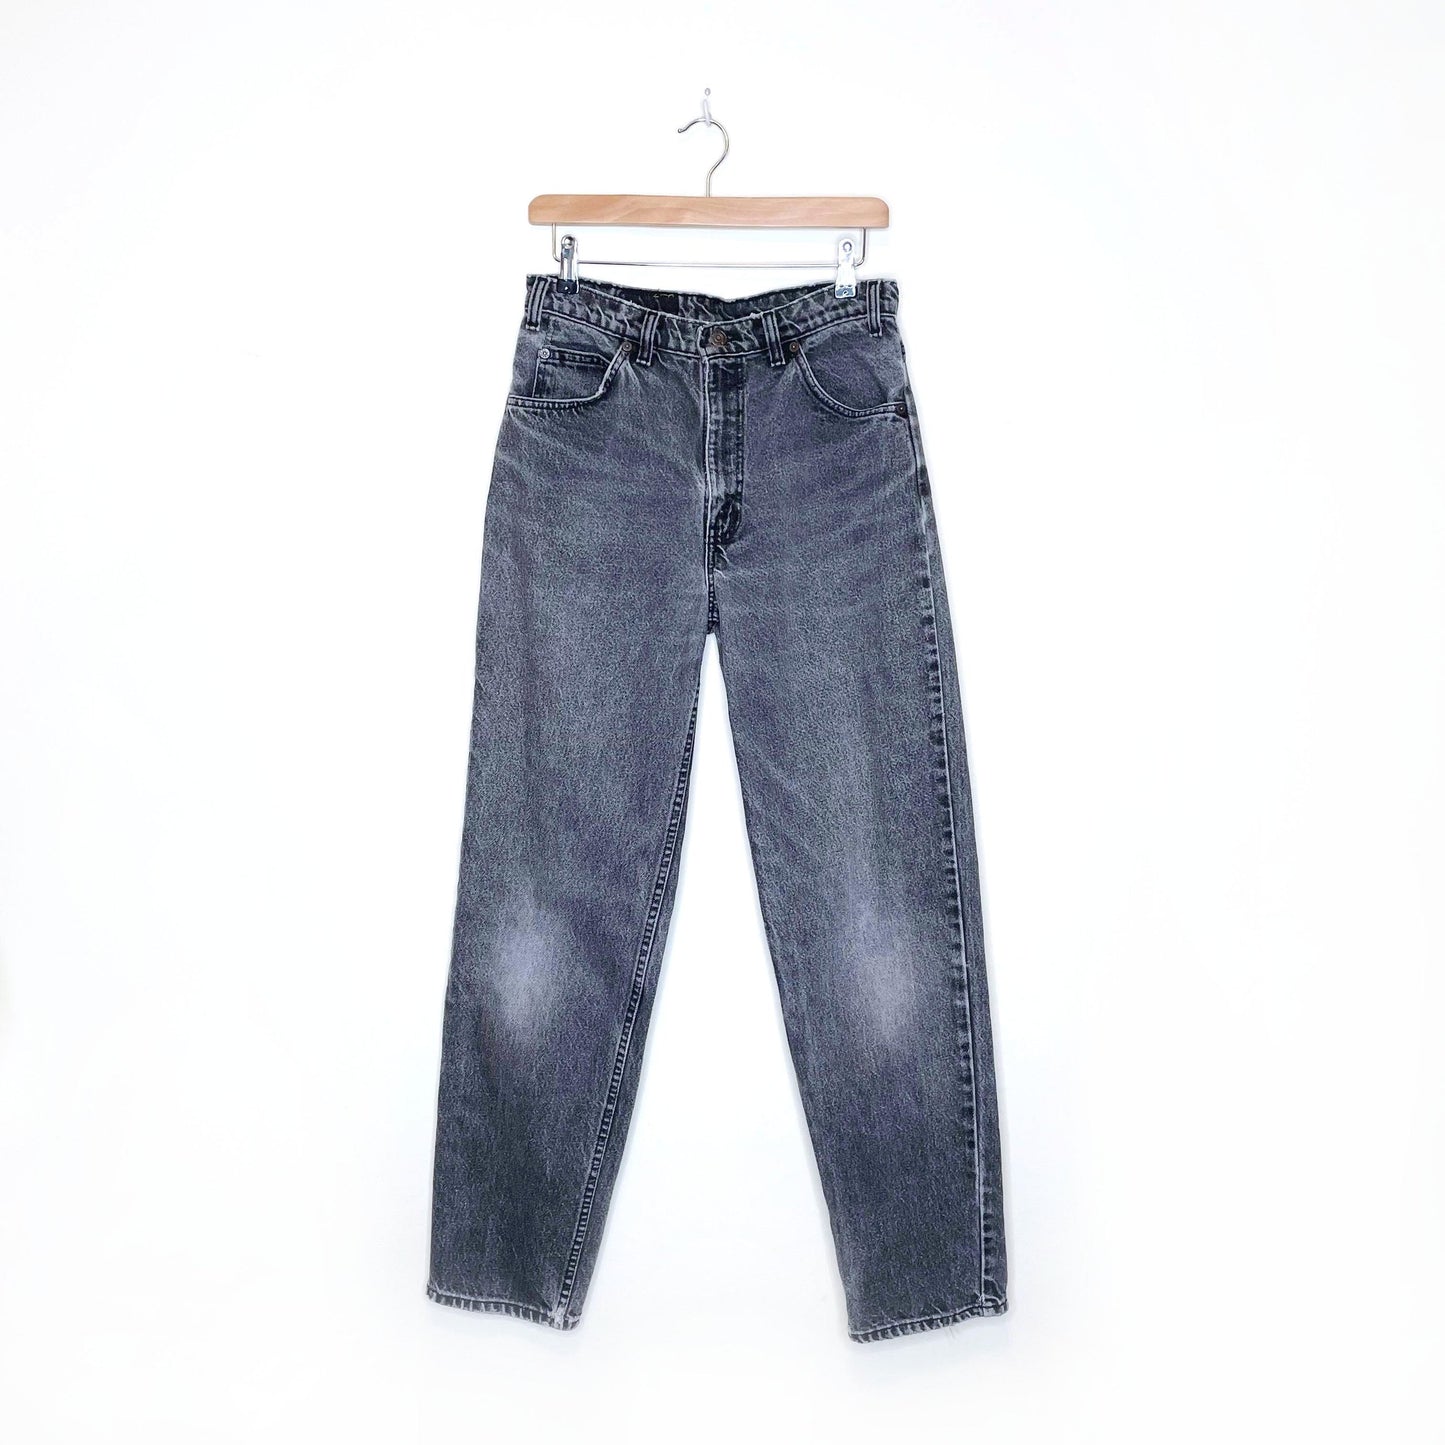 vintage 90's levi's orange tab 634 faded black jeans - size 31M / 28W